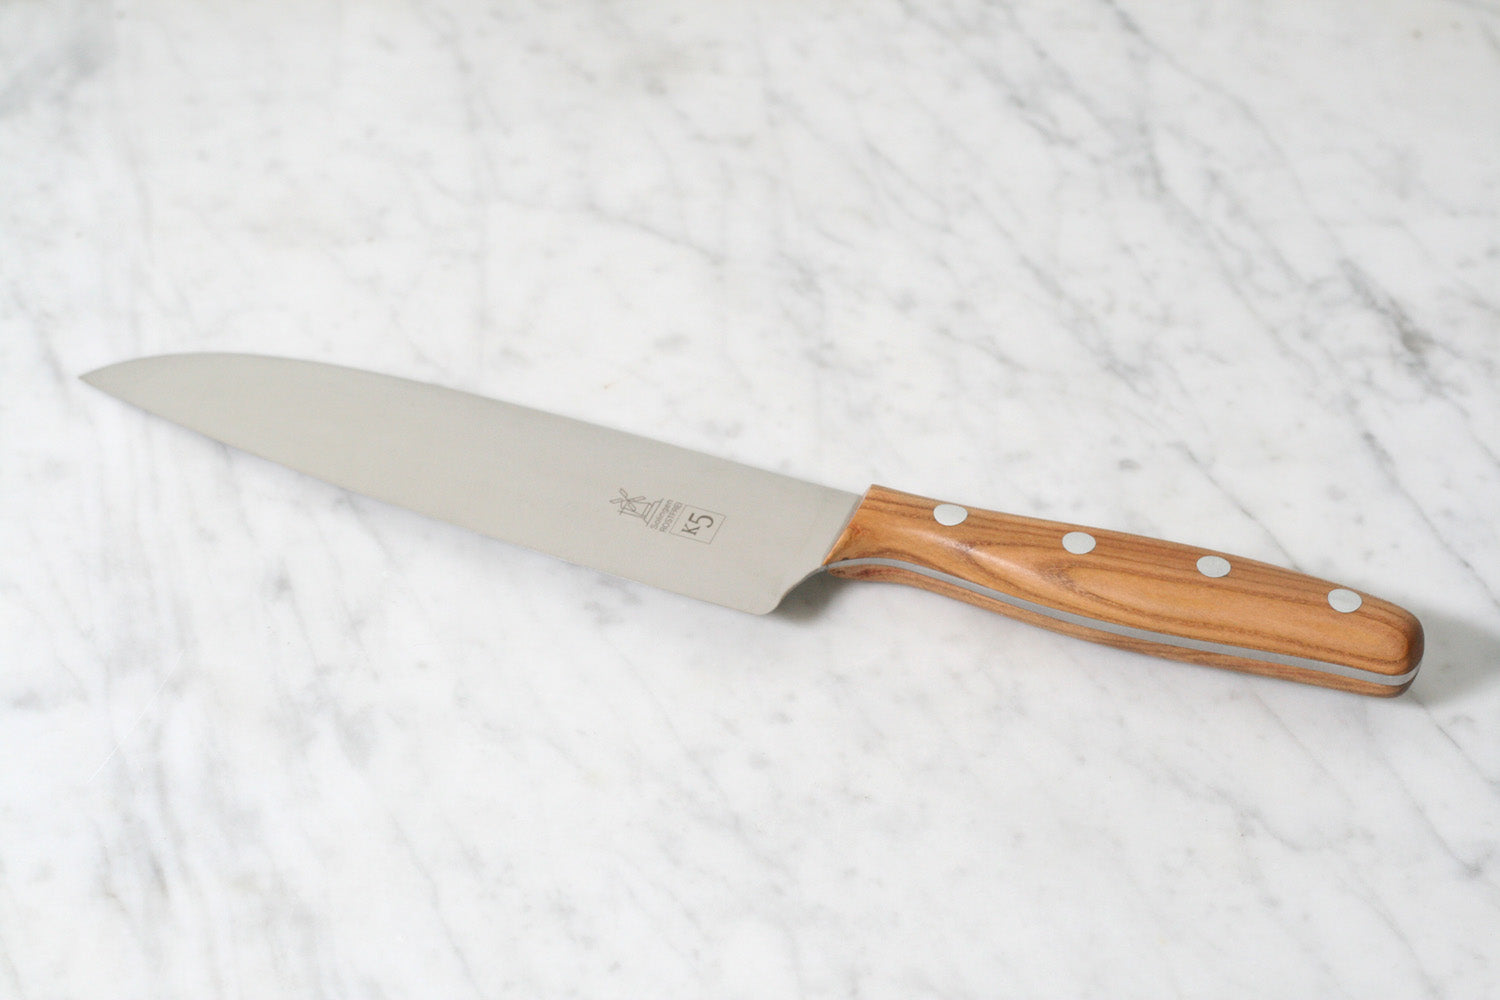 Robert Herder K5 Chef's Knife, Apricot Handle